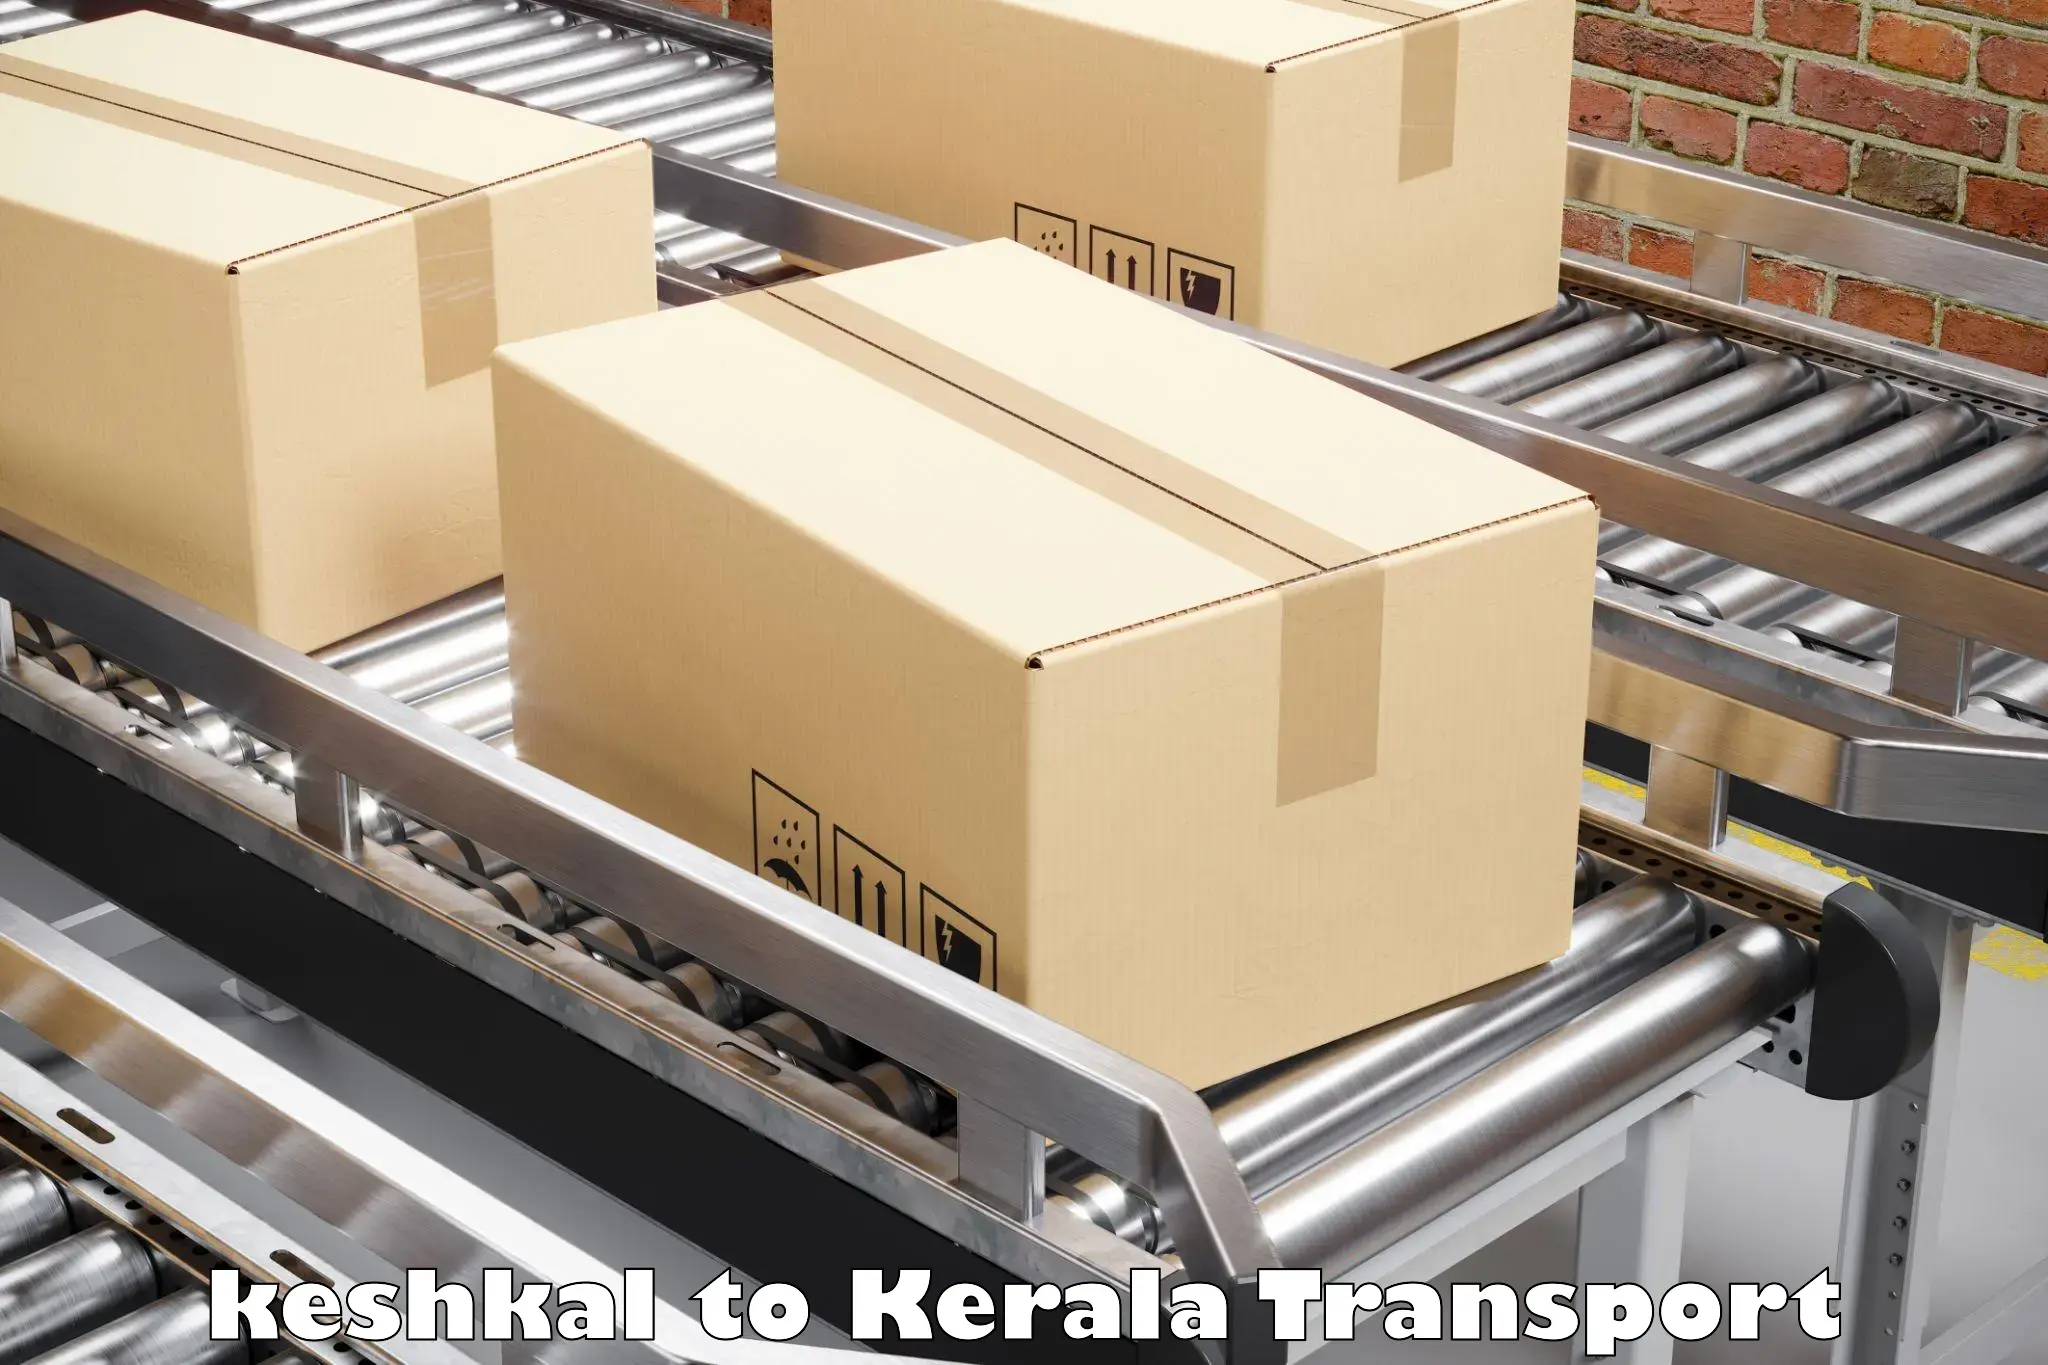 Daily parcel service transport keshkal to Manjeshwar